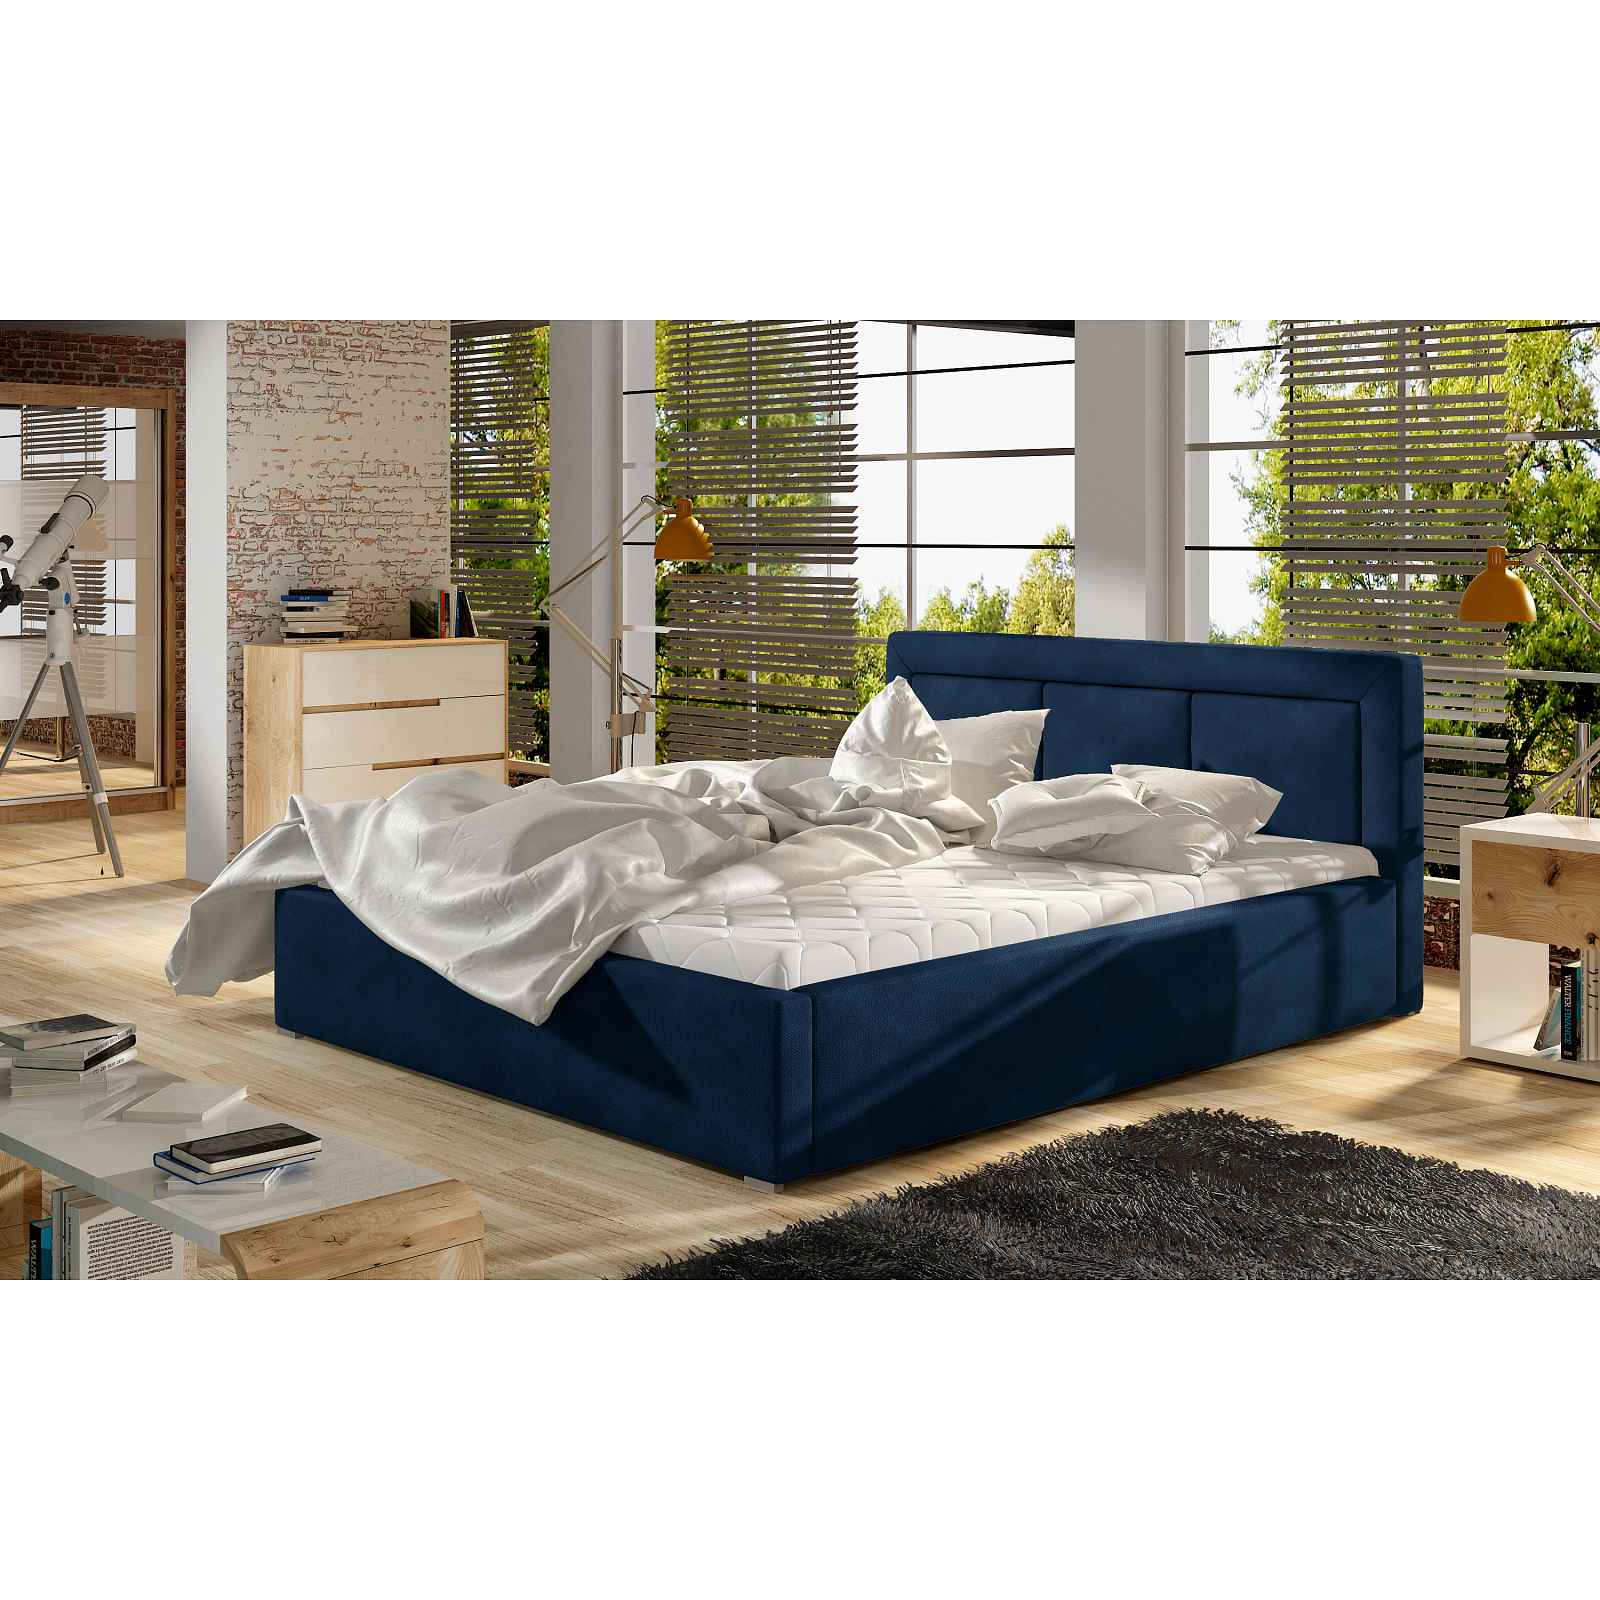 Moderní postel Bregen 180x200cm, modrá HELCEL